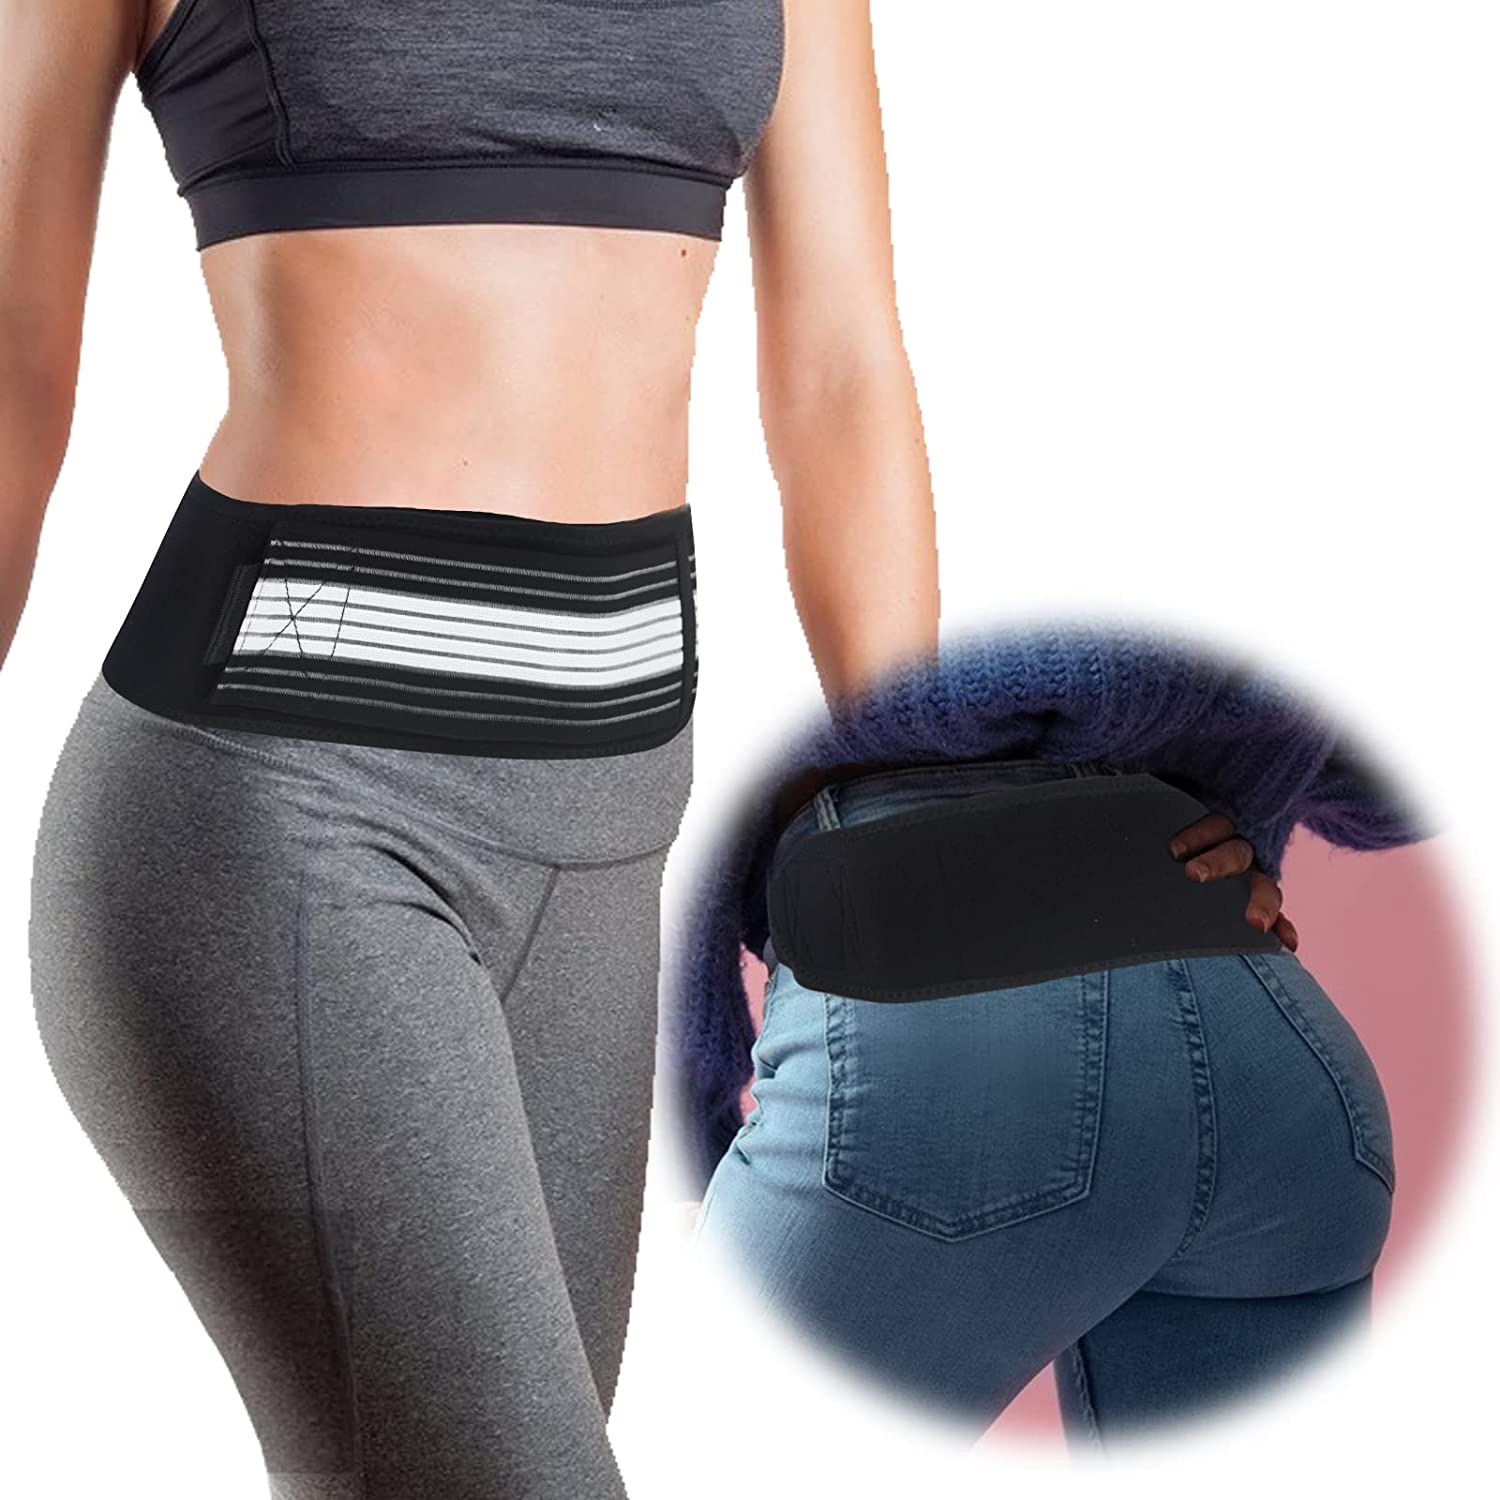 View Elastic Sacroiliac Hip Belt for Women and Men